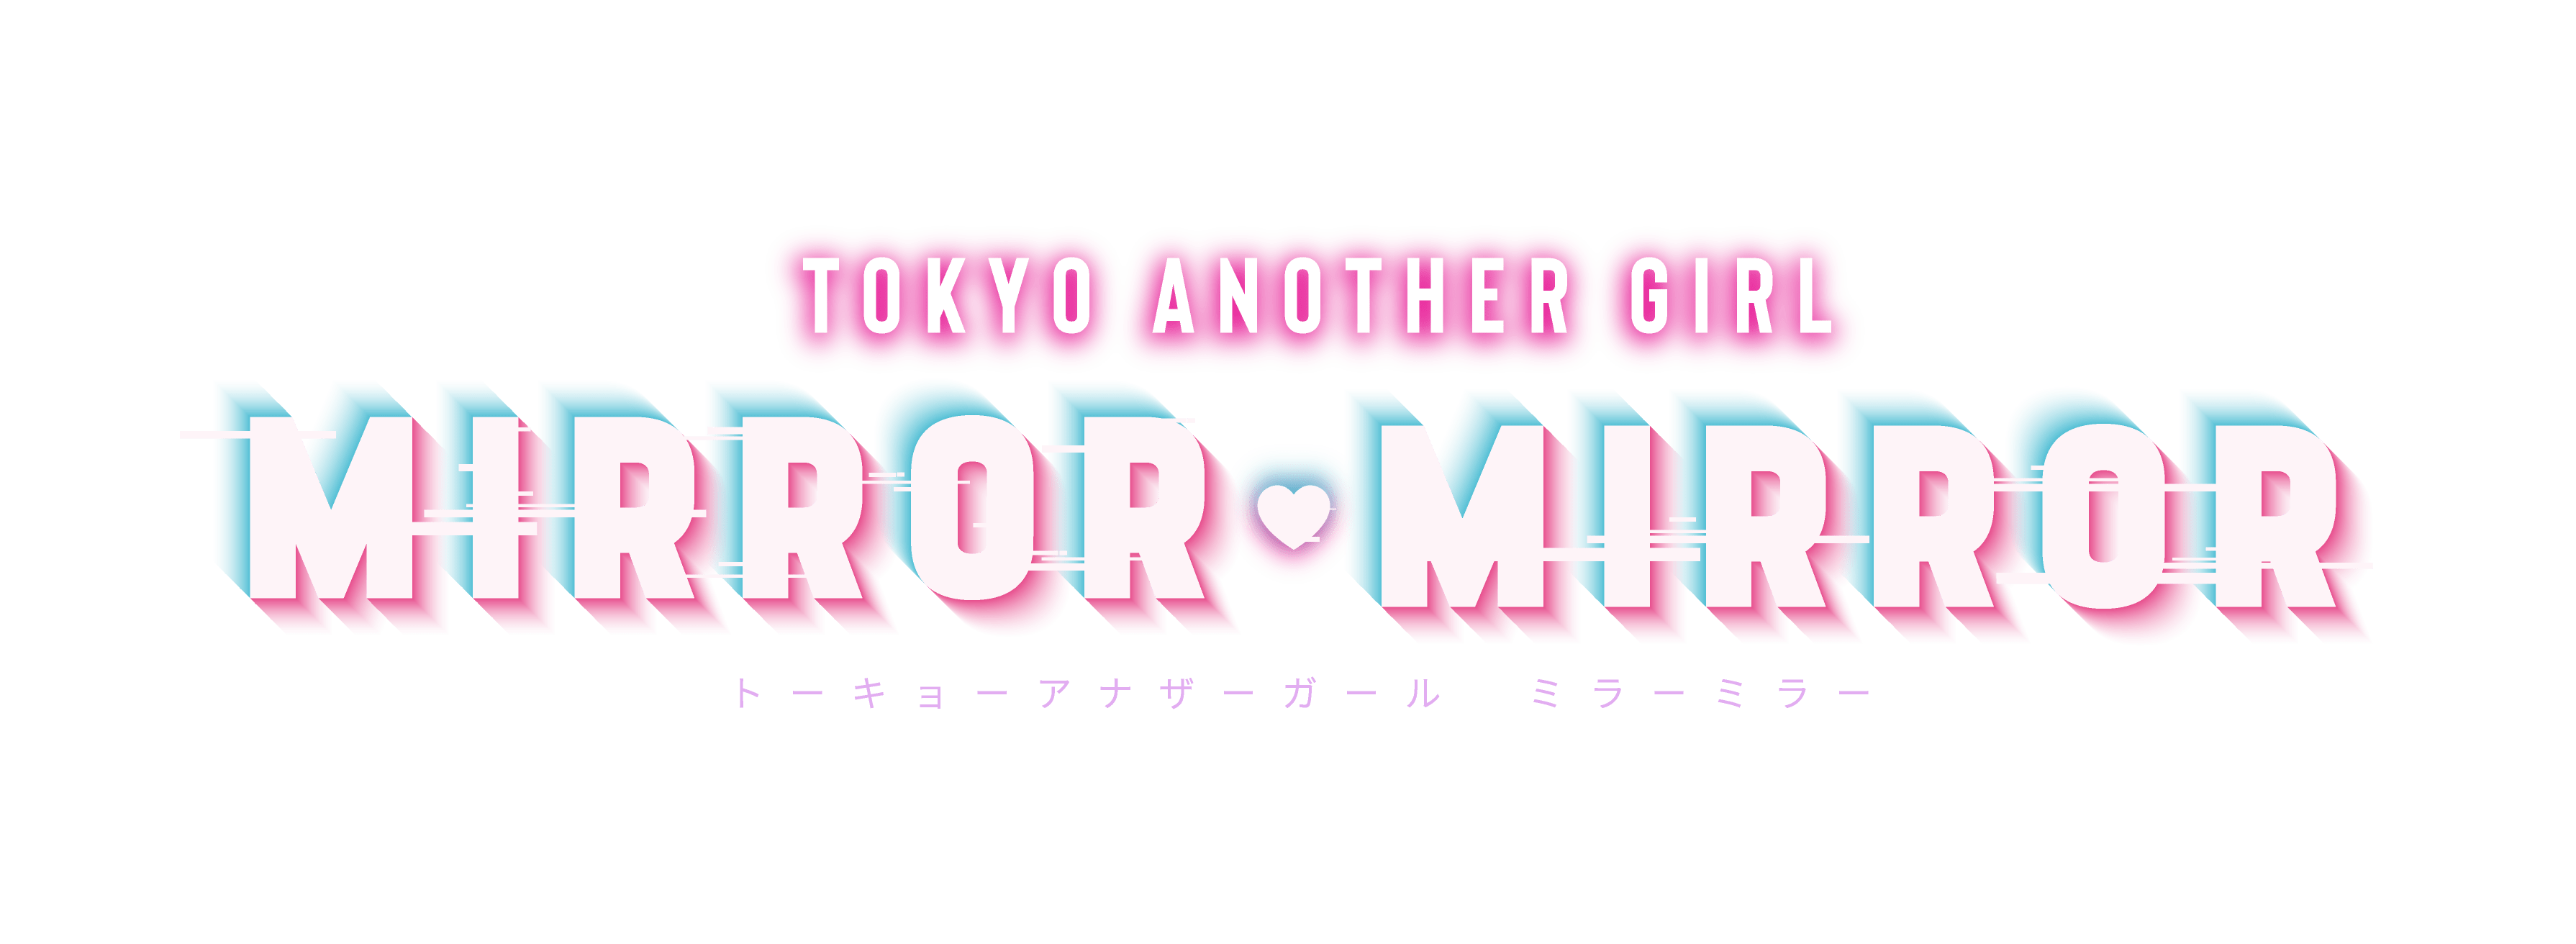 TOKYO ANOTHER GIRL MIRROR MIRROR